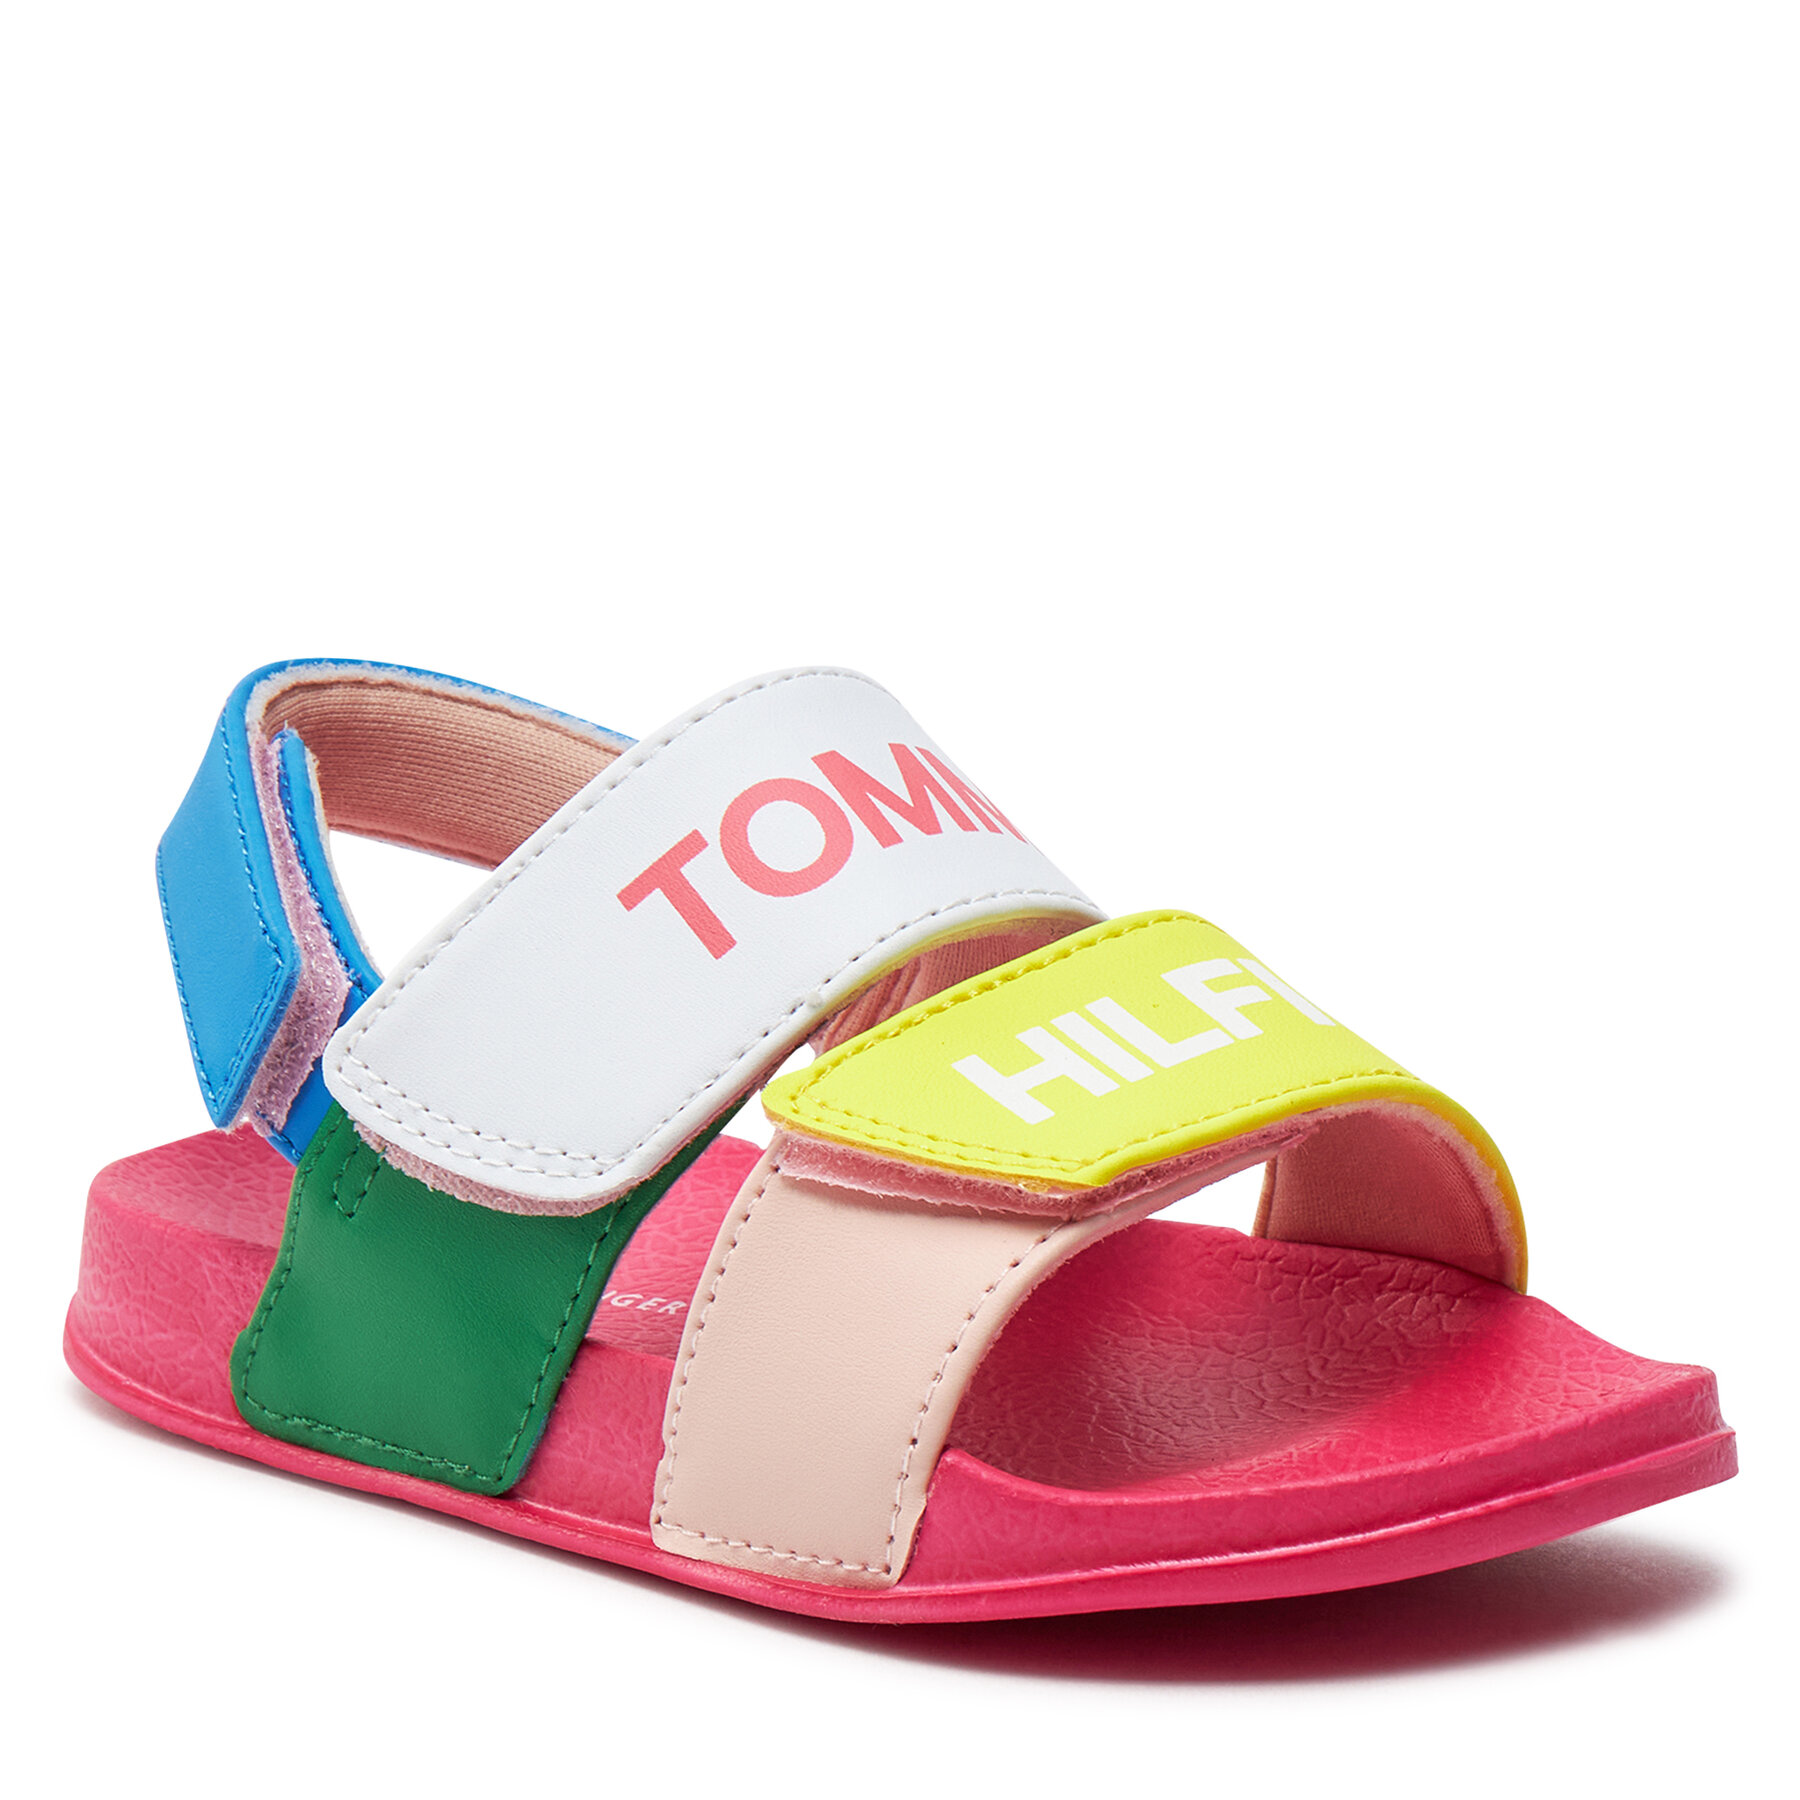 Sandale Tommy Hilfiger T1A2-33298-1172 S Multicolor Y913